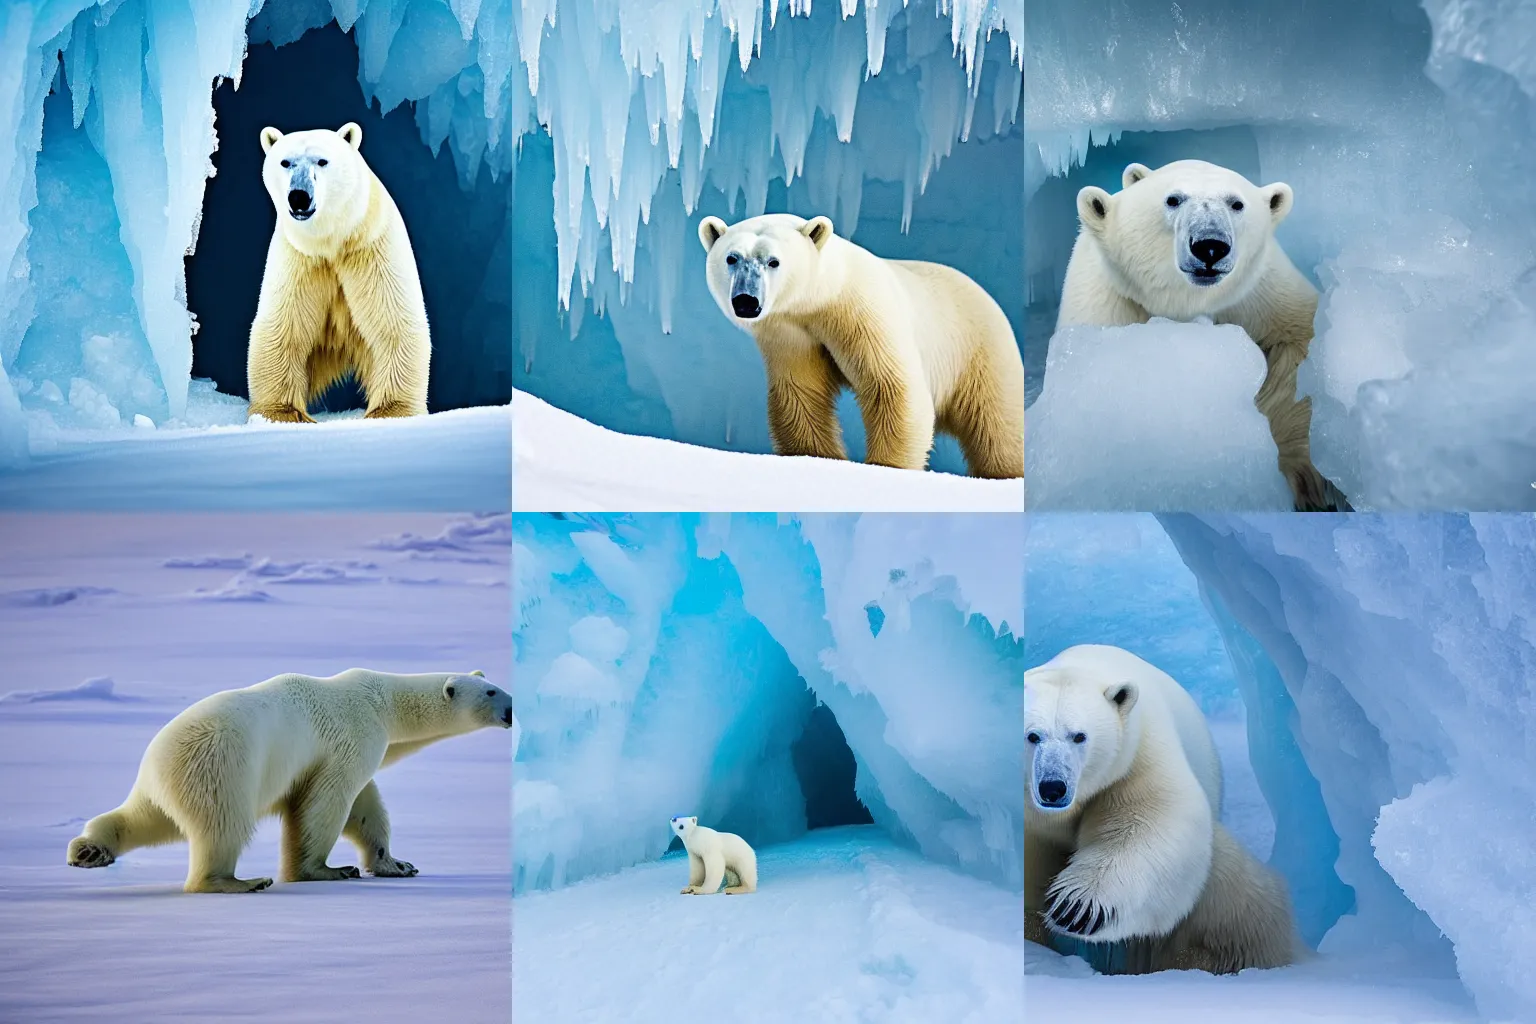 Prompt: Polar bear exploring an ice cave. Wildlife photography.